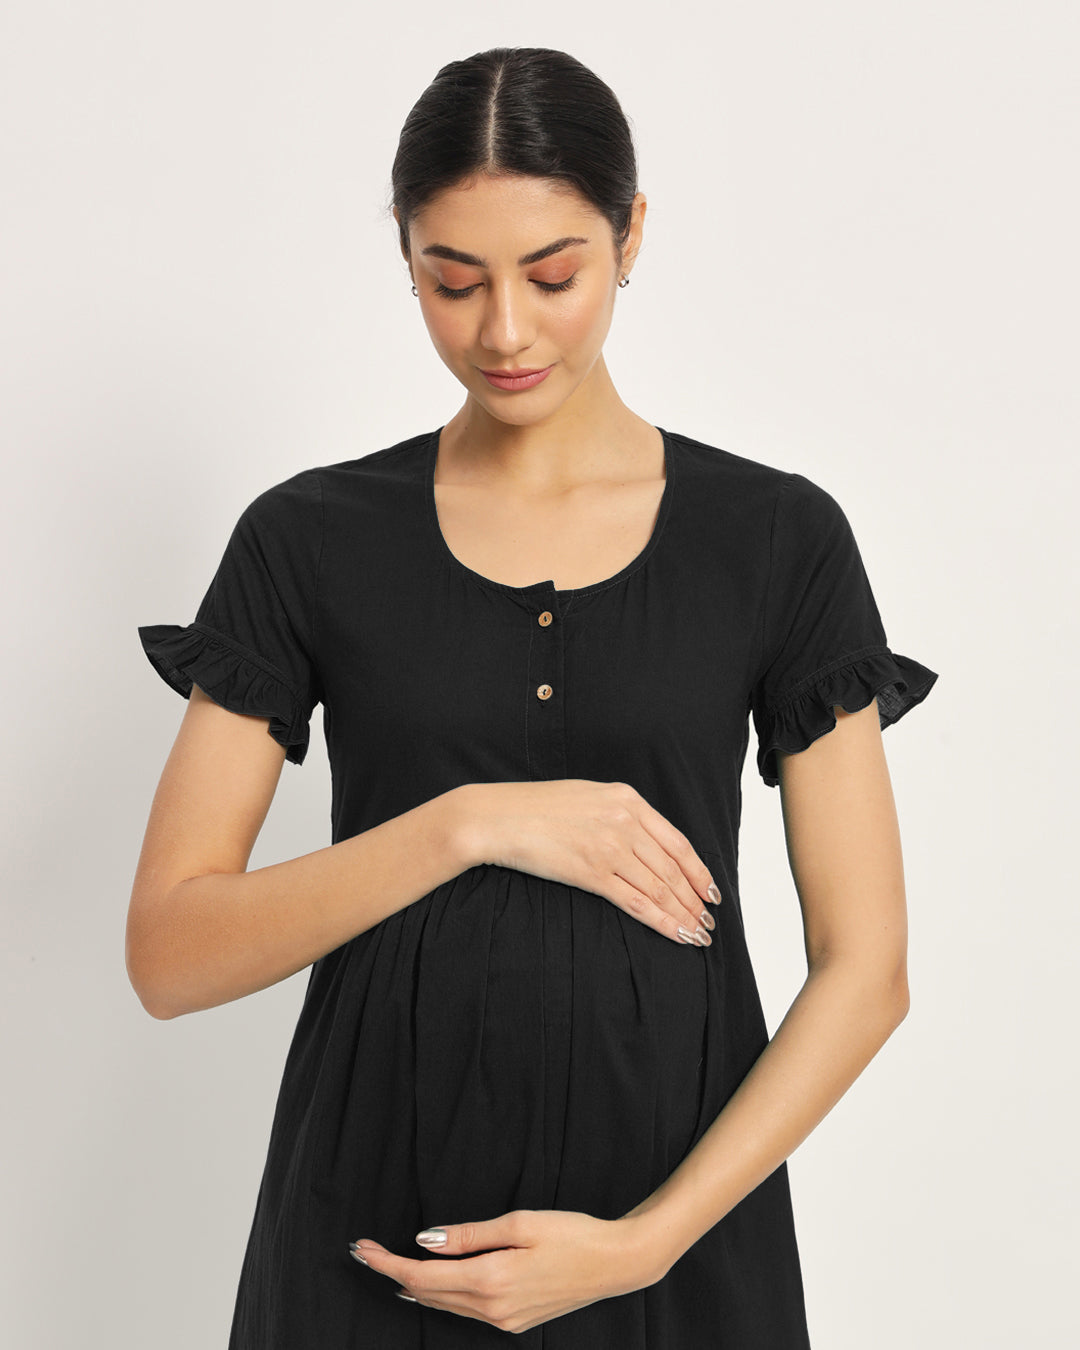 Classic Black Bumpin' & Stylin' Maternity & Nursing Dress